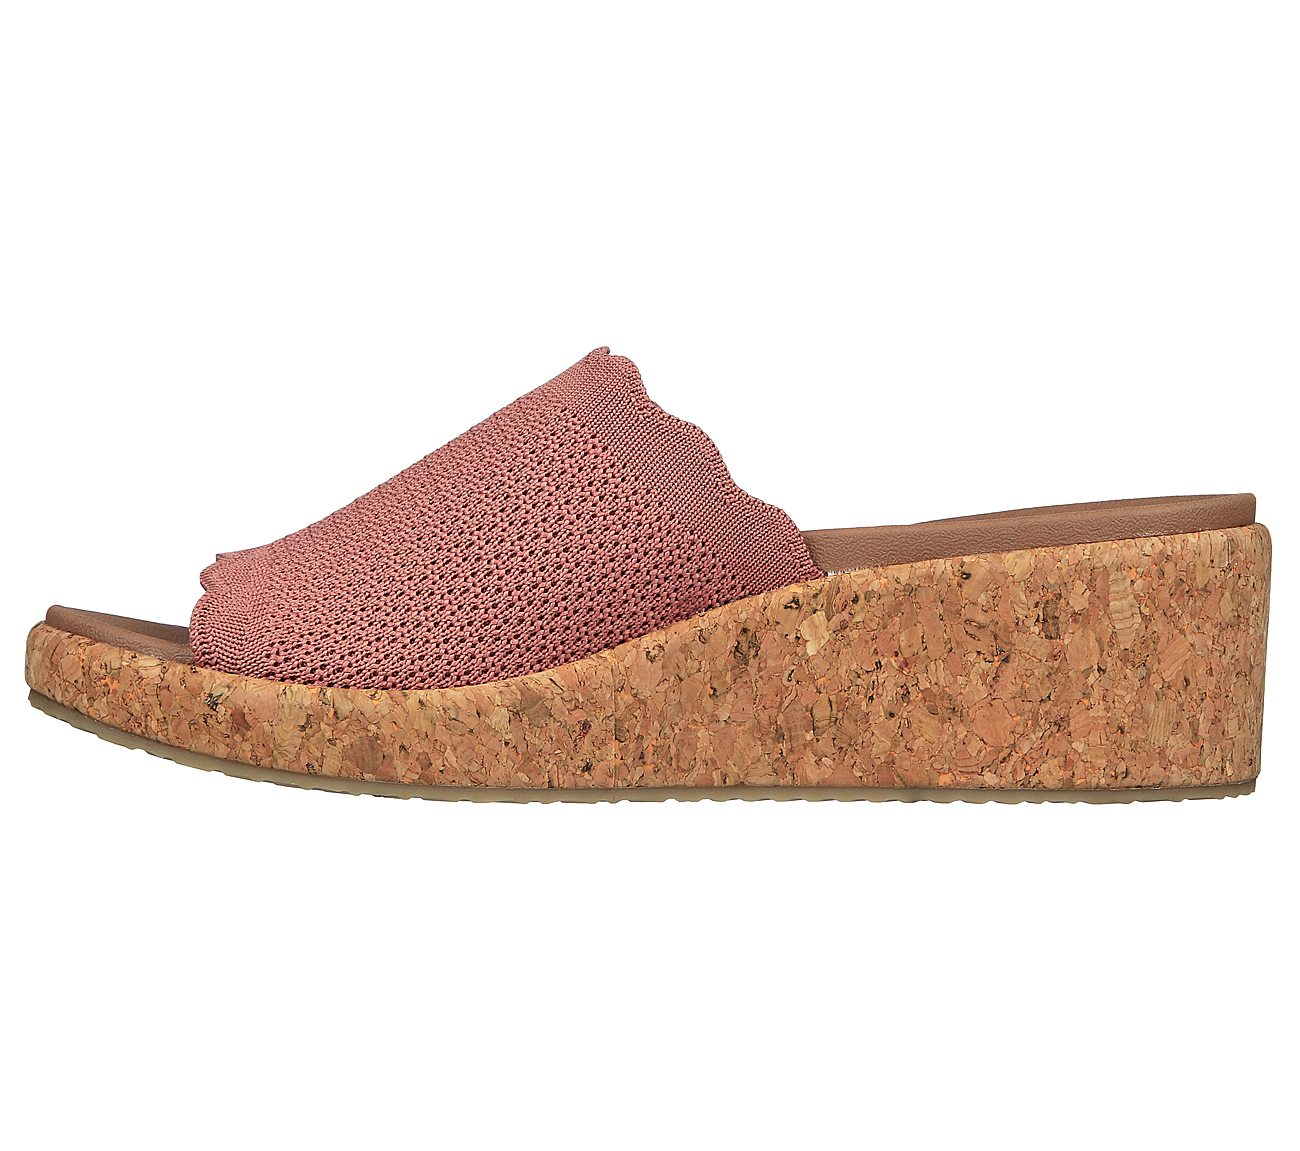 ARCH FIT BEVERLEE - JEMMA, ROSE Footwear Left View